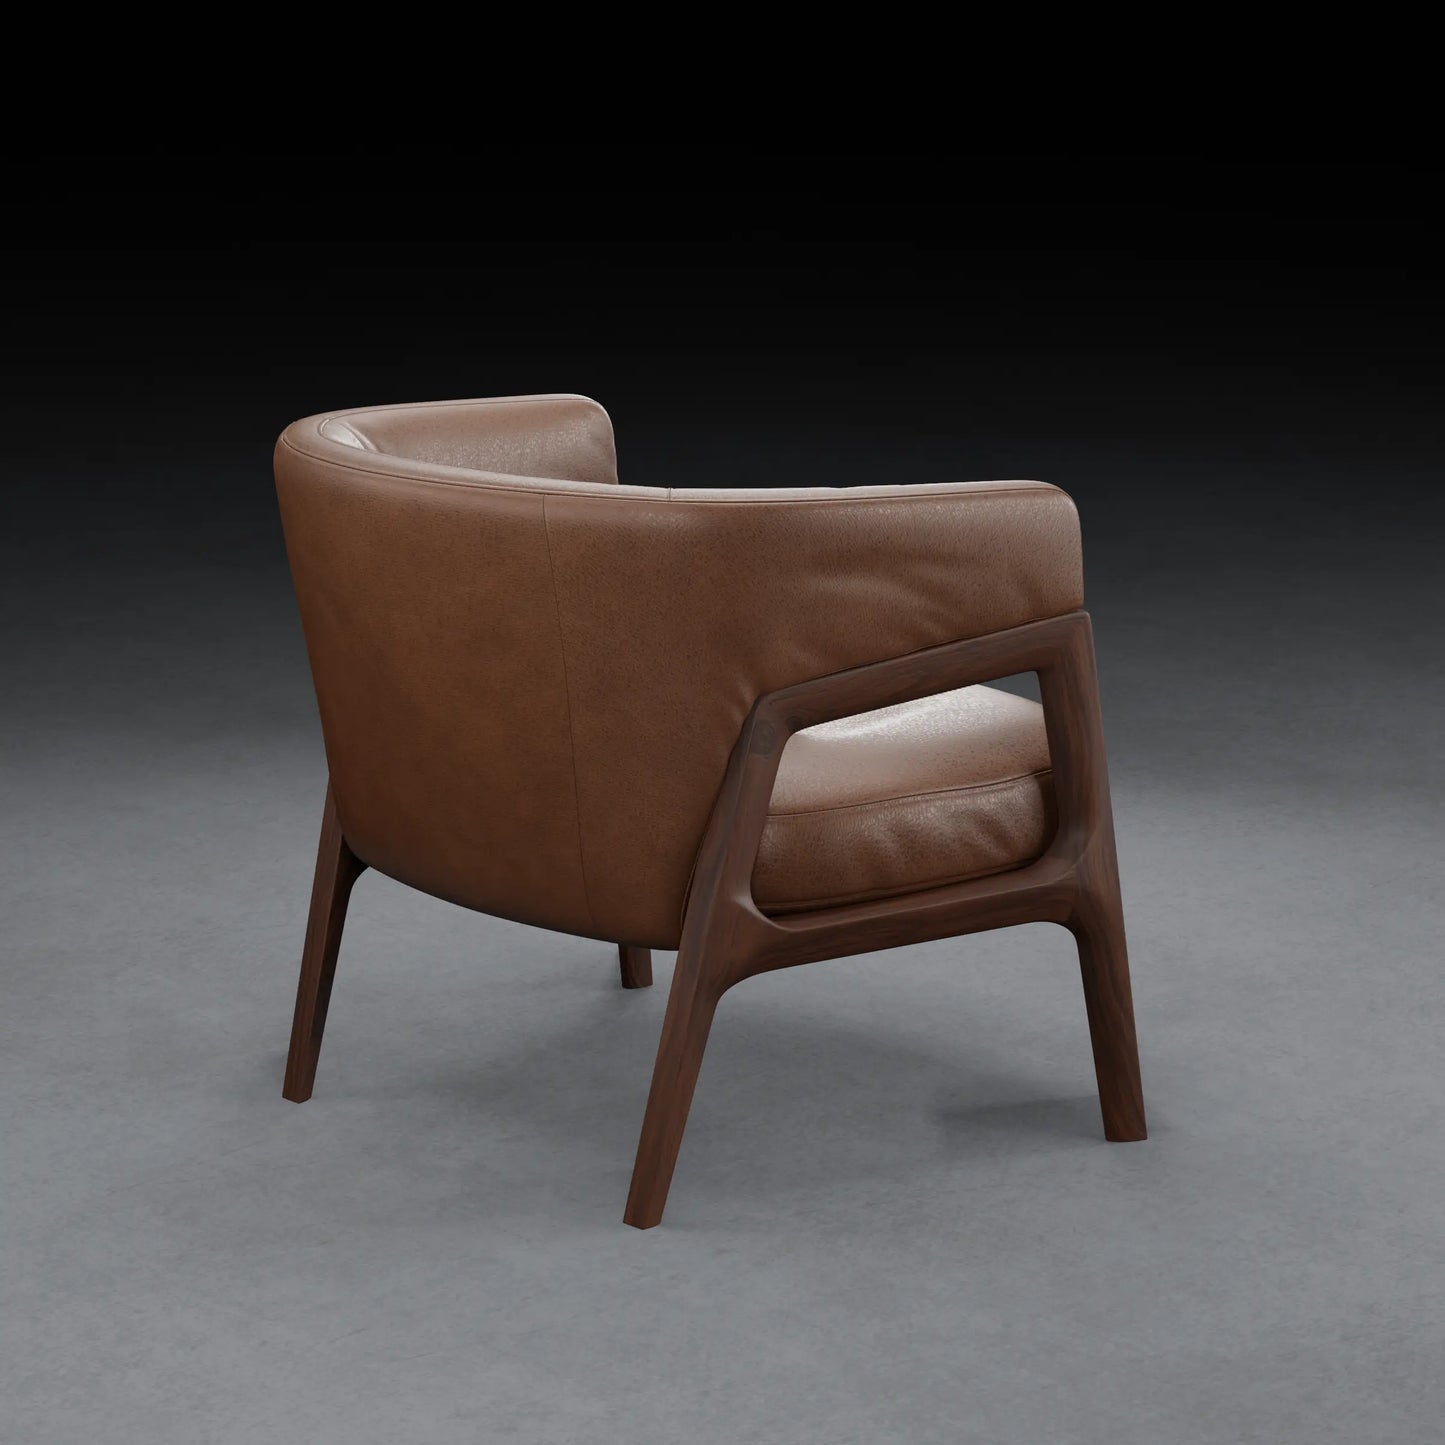 LEMON - Armchair in Teak wood - Leather Finish | Brown Color